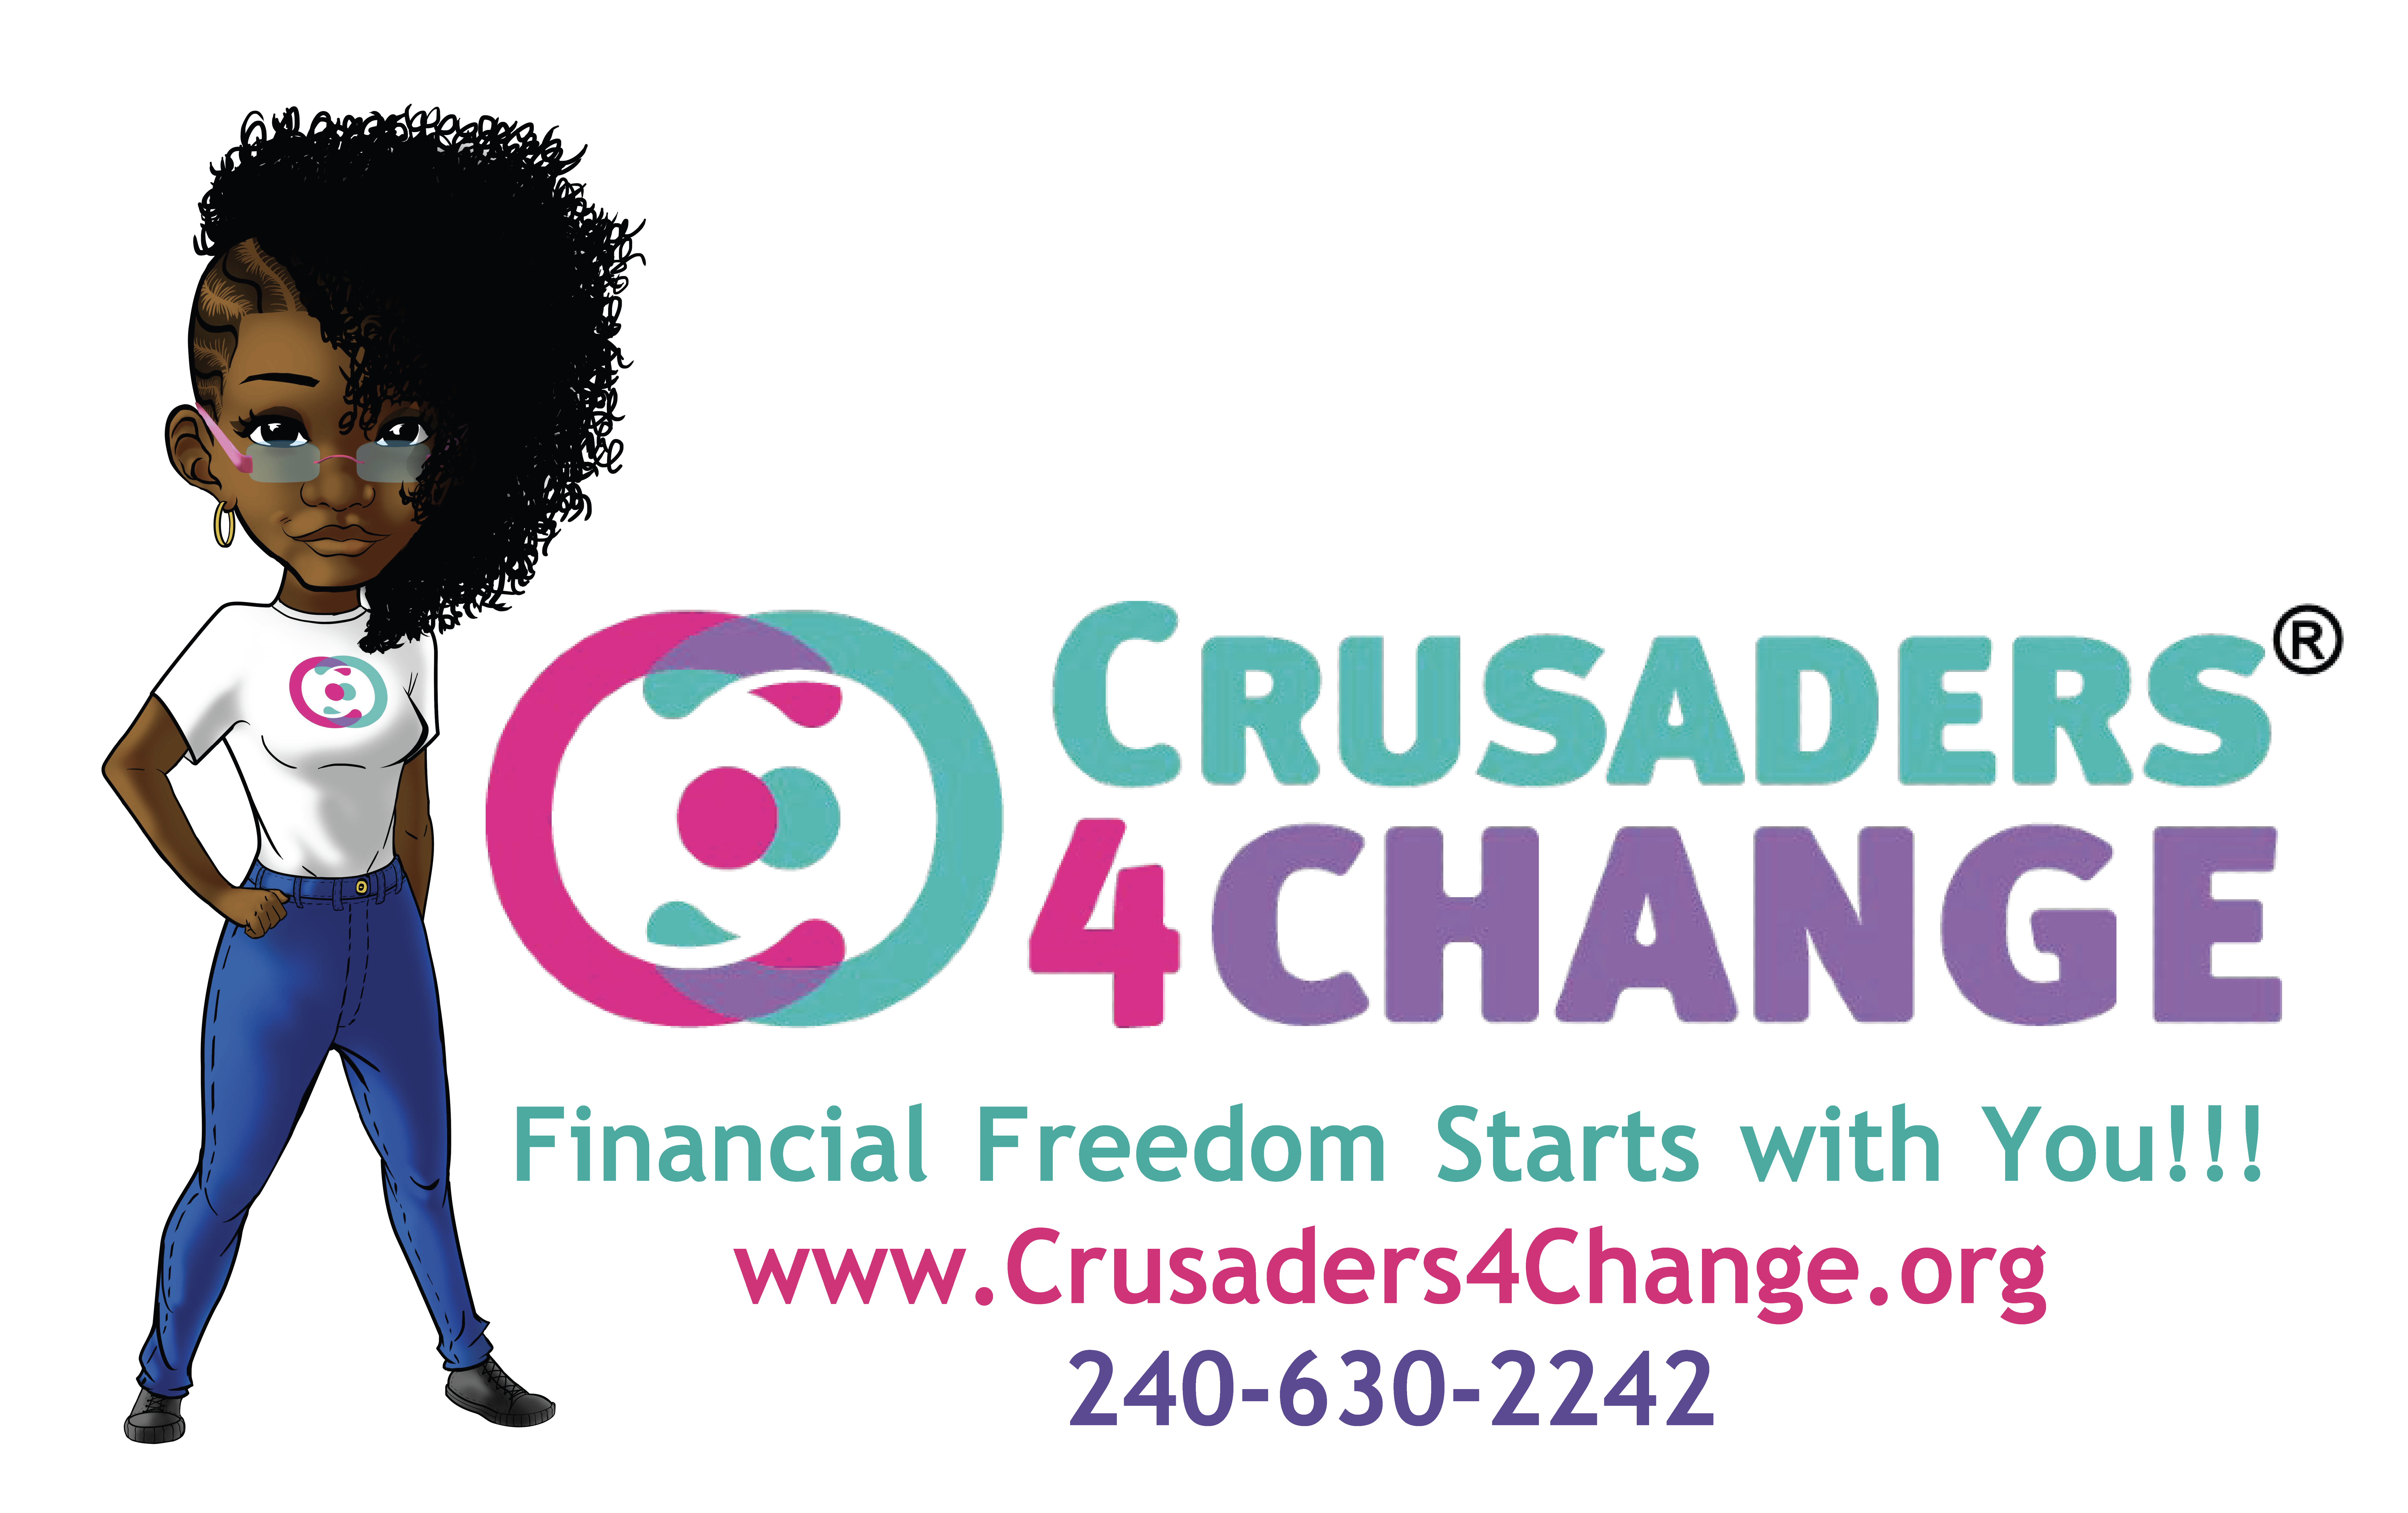 Crusaders for Change, LLC